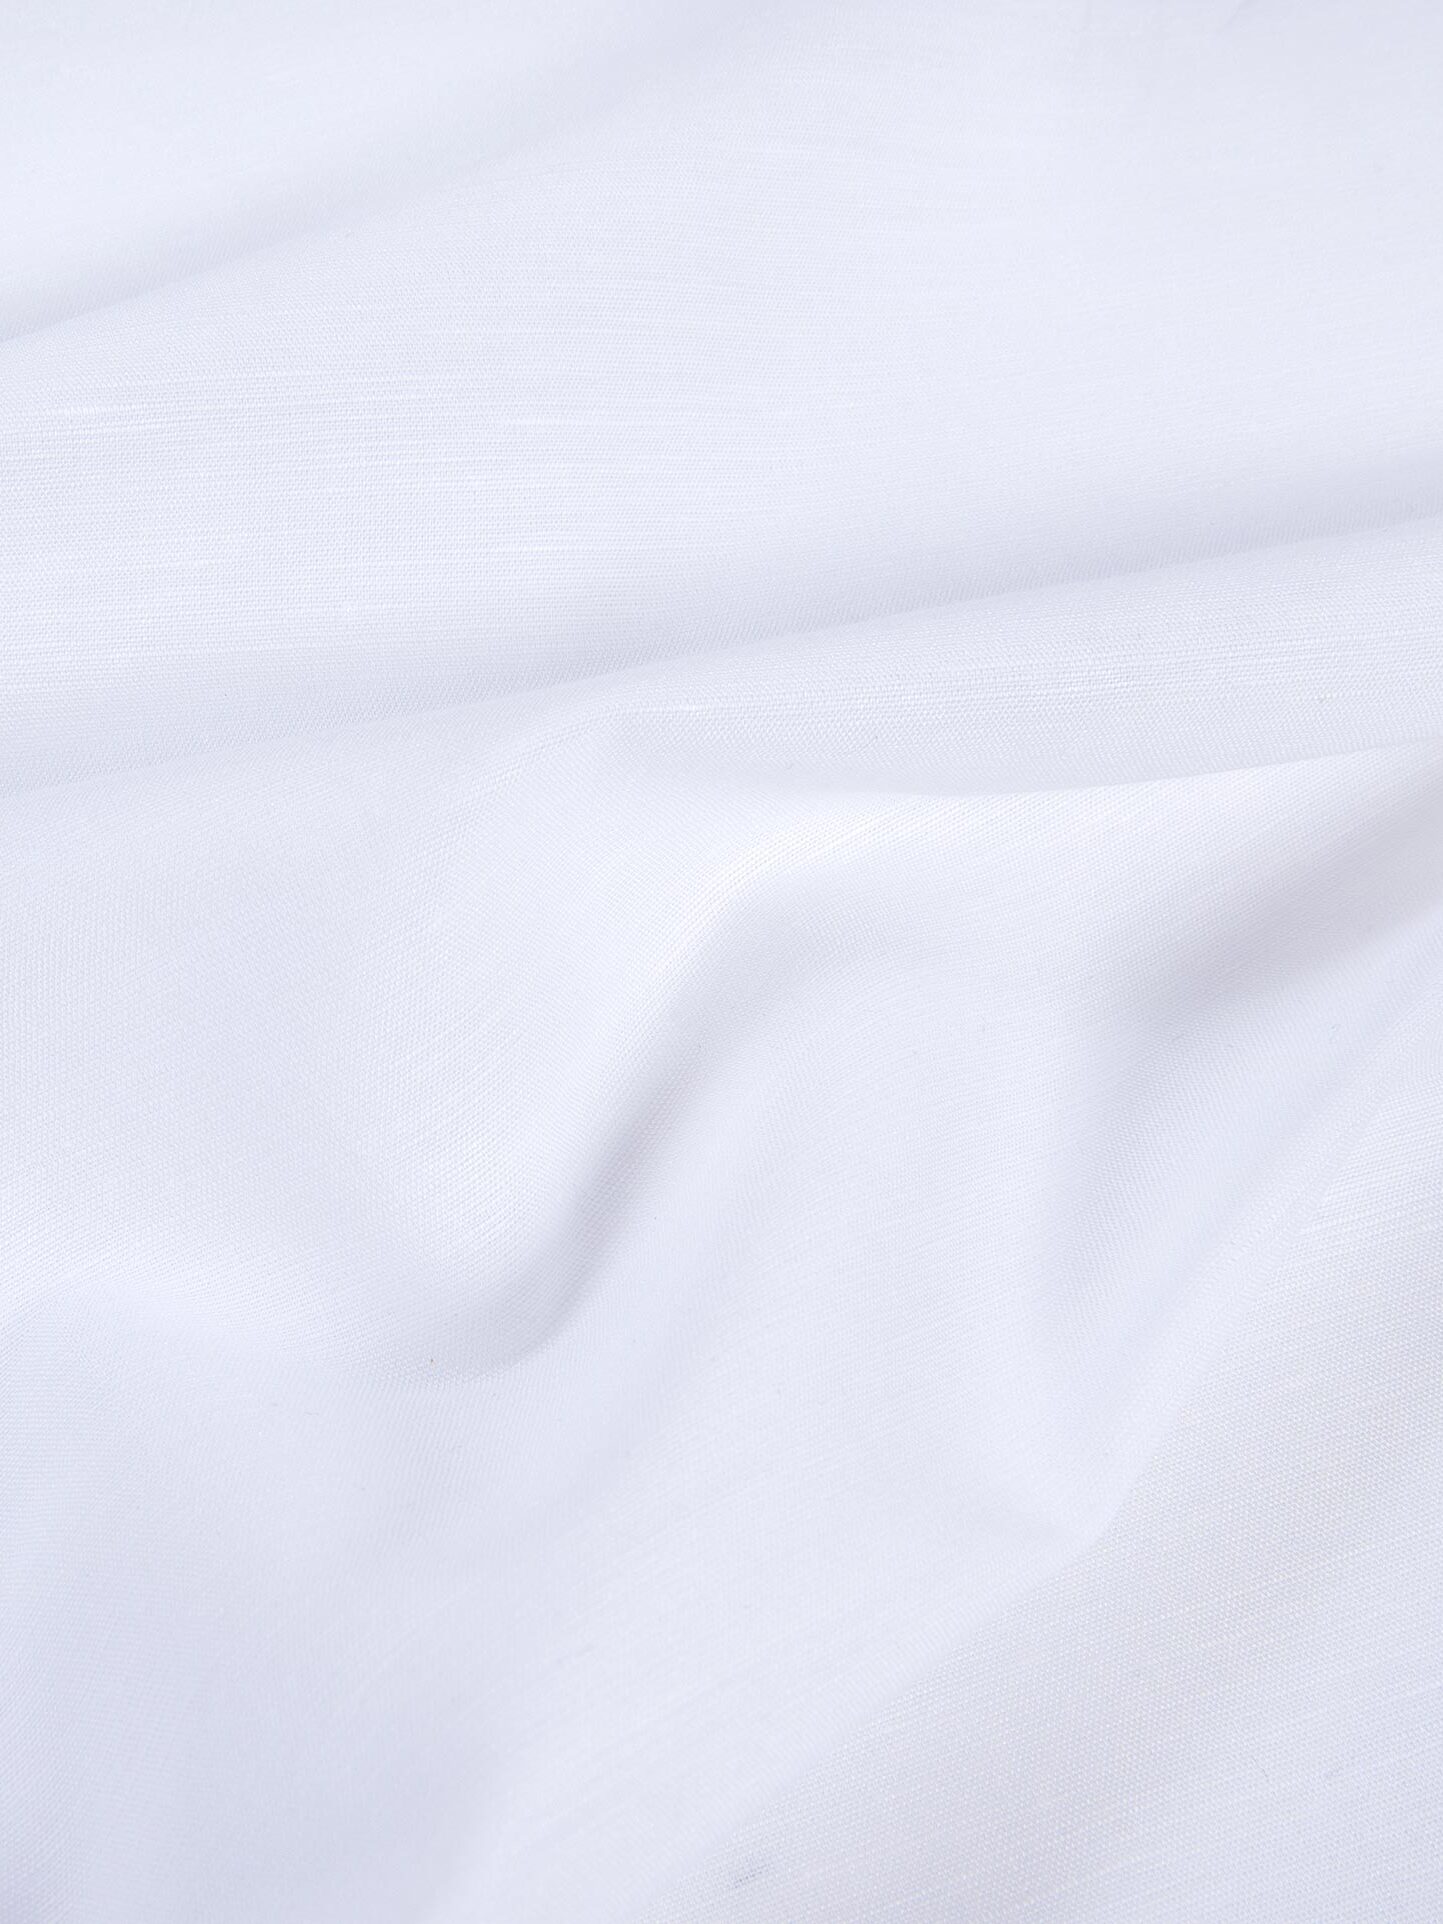 White Fine Cotton Linen Shirts by Proper Cloth